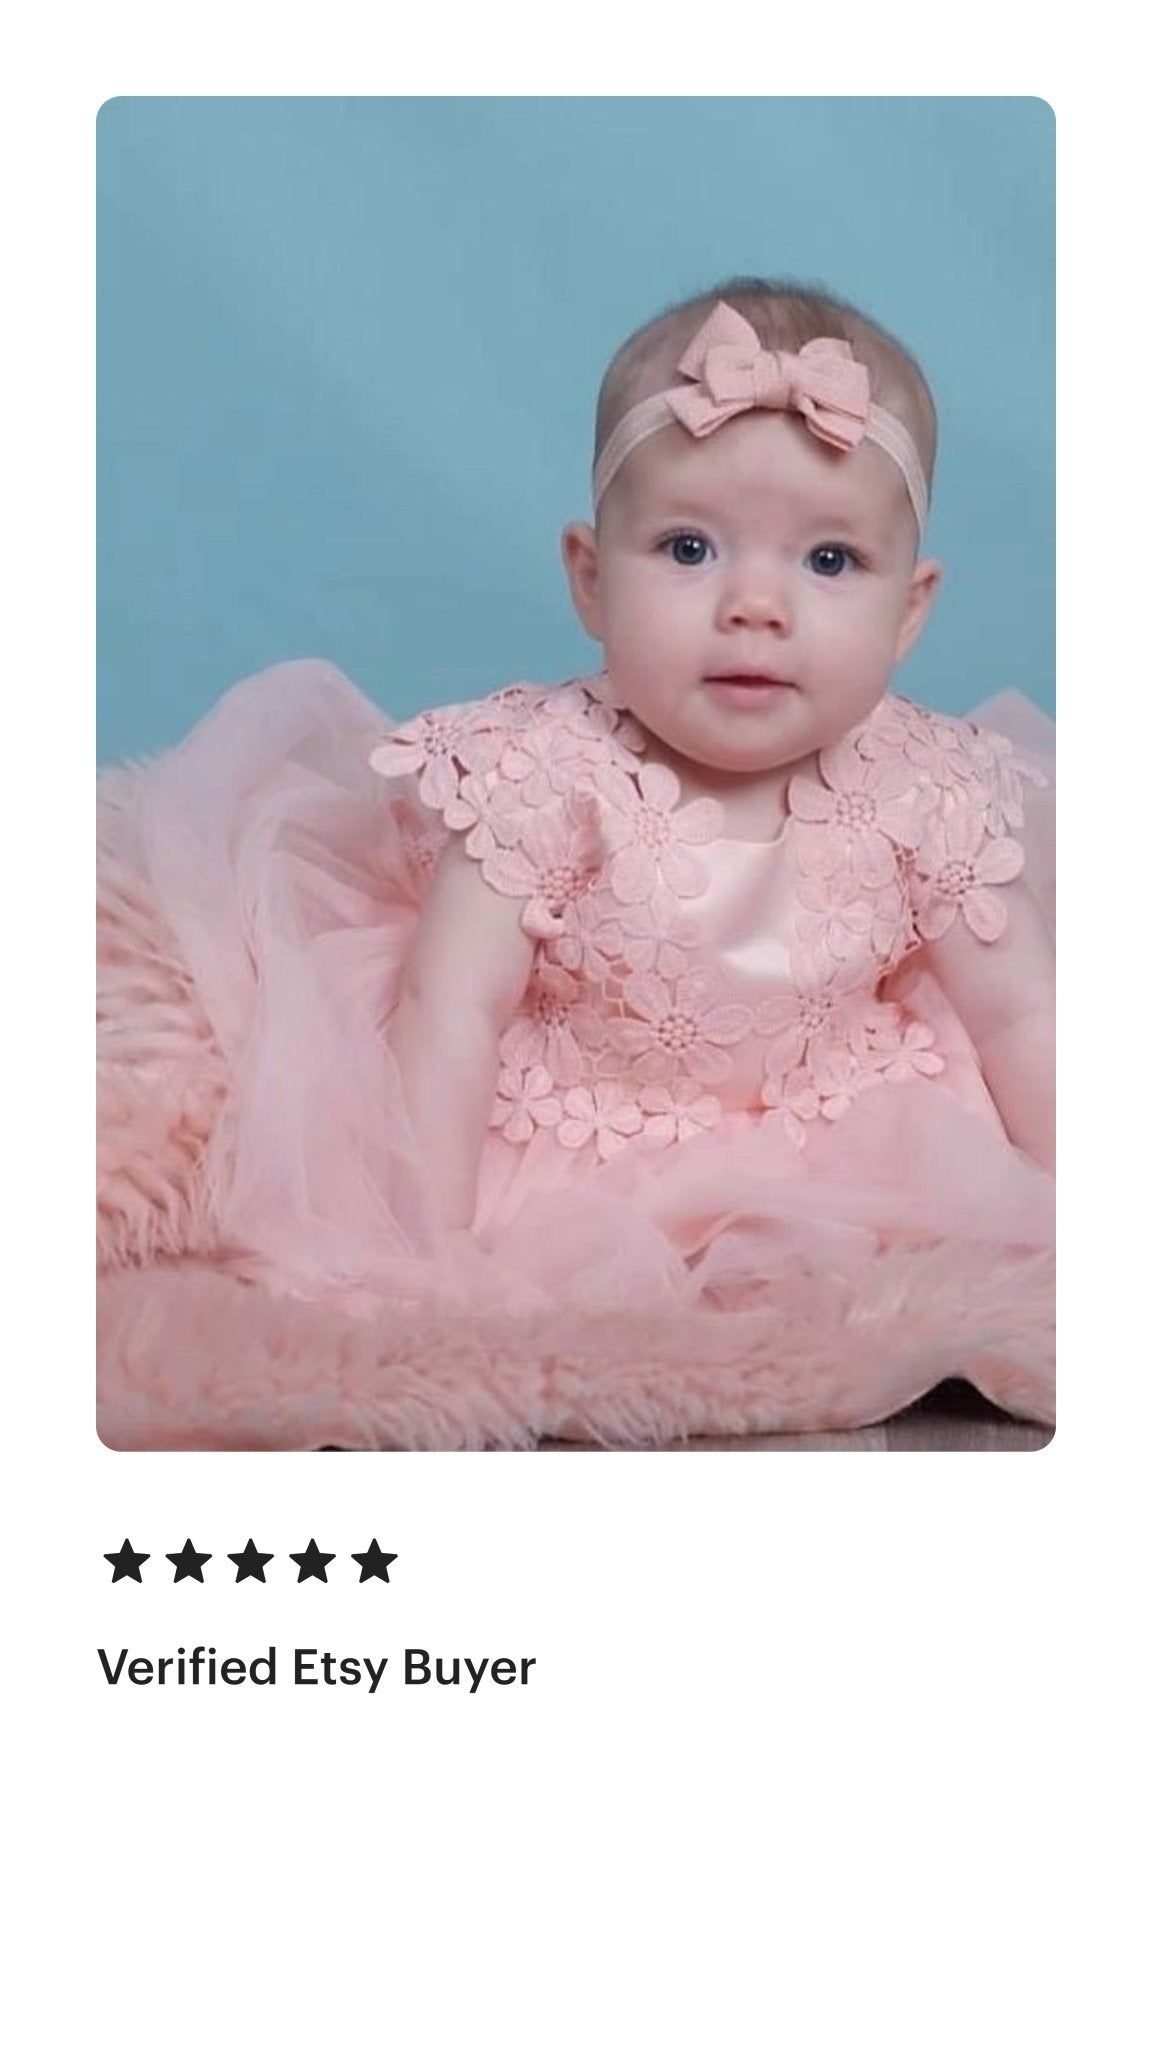 Lovely Baby Girl Elegant Tutu Dress Pink or White - TinySweetPeaBoutique